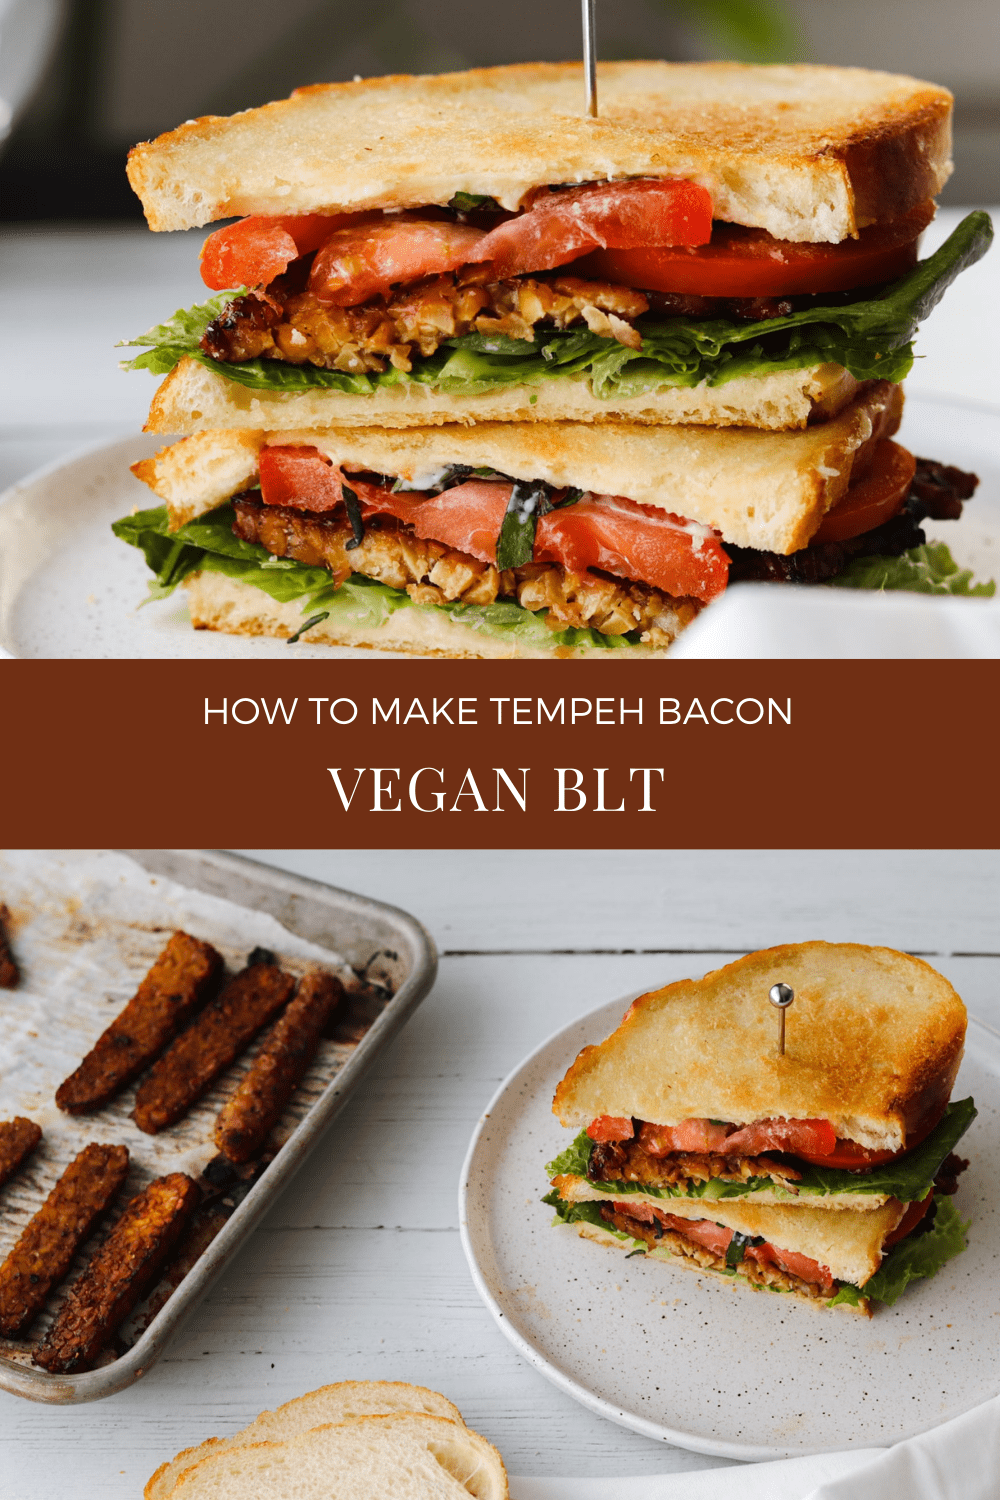 Vegan BLT Recipe How to Make Tempeh Bacon Video